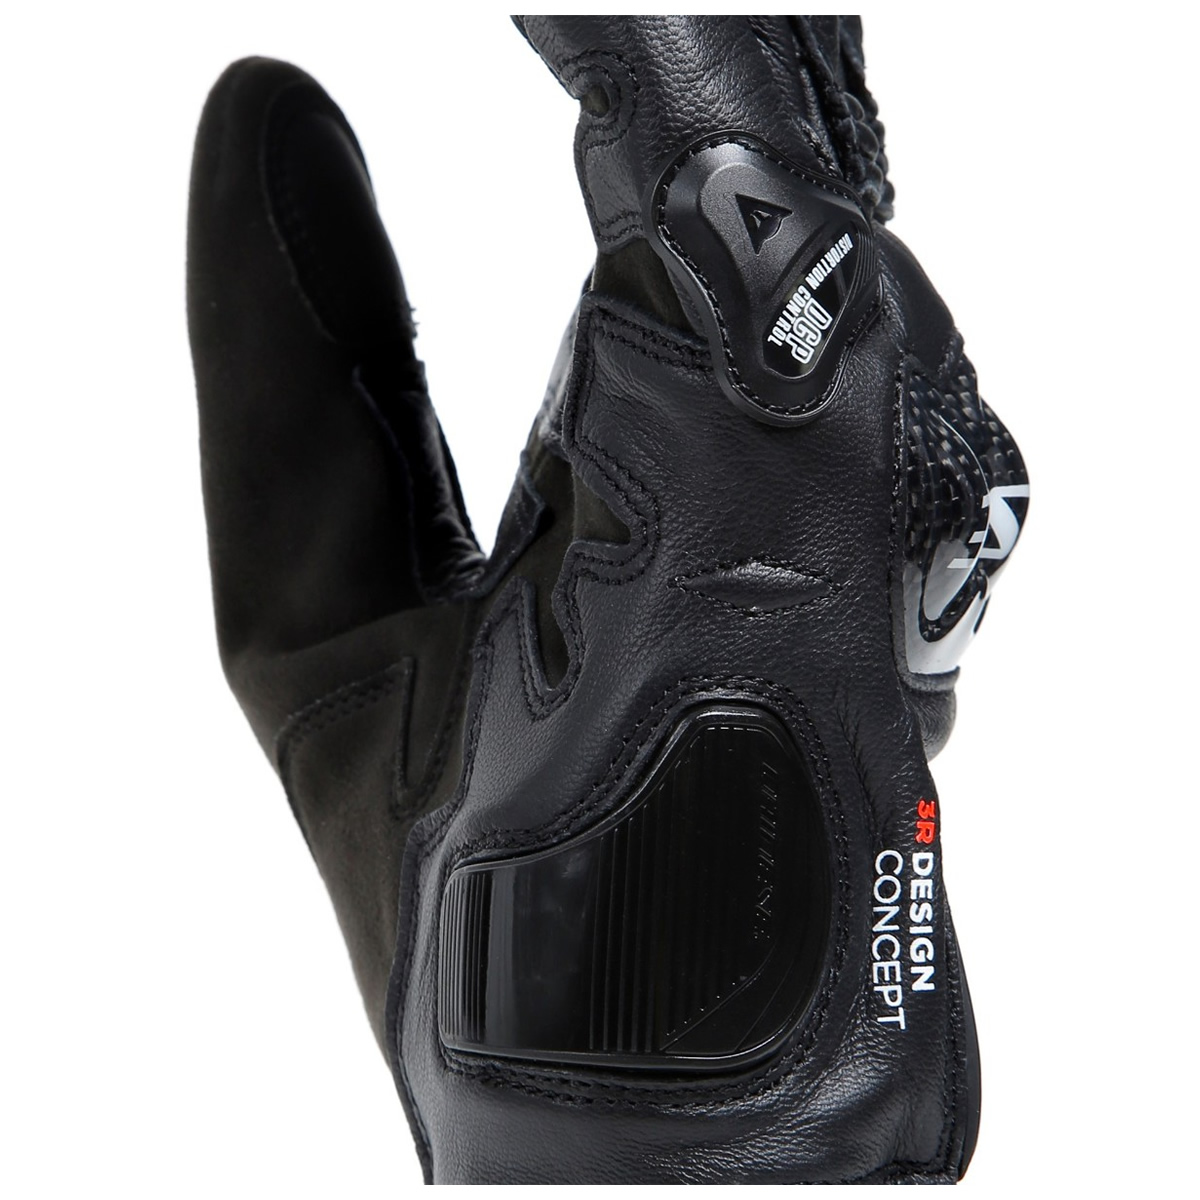 Dainese Handschuhe Carbon 4 Short, schwarz